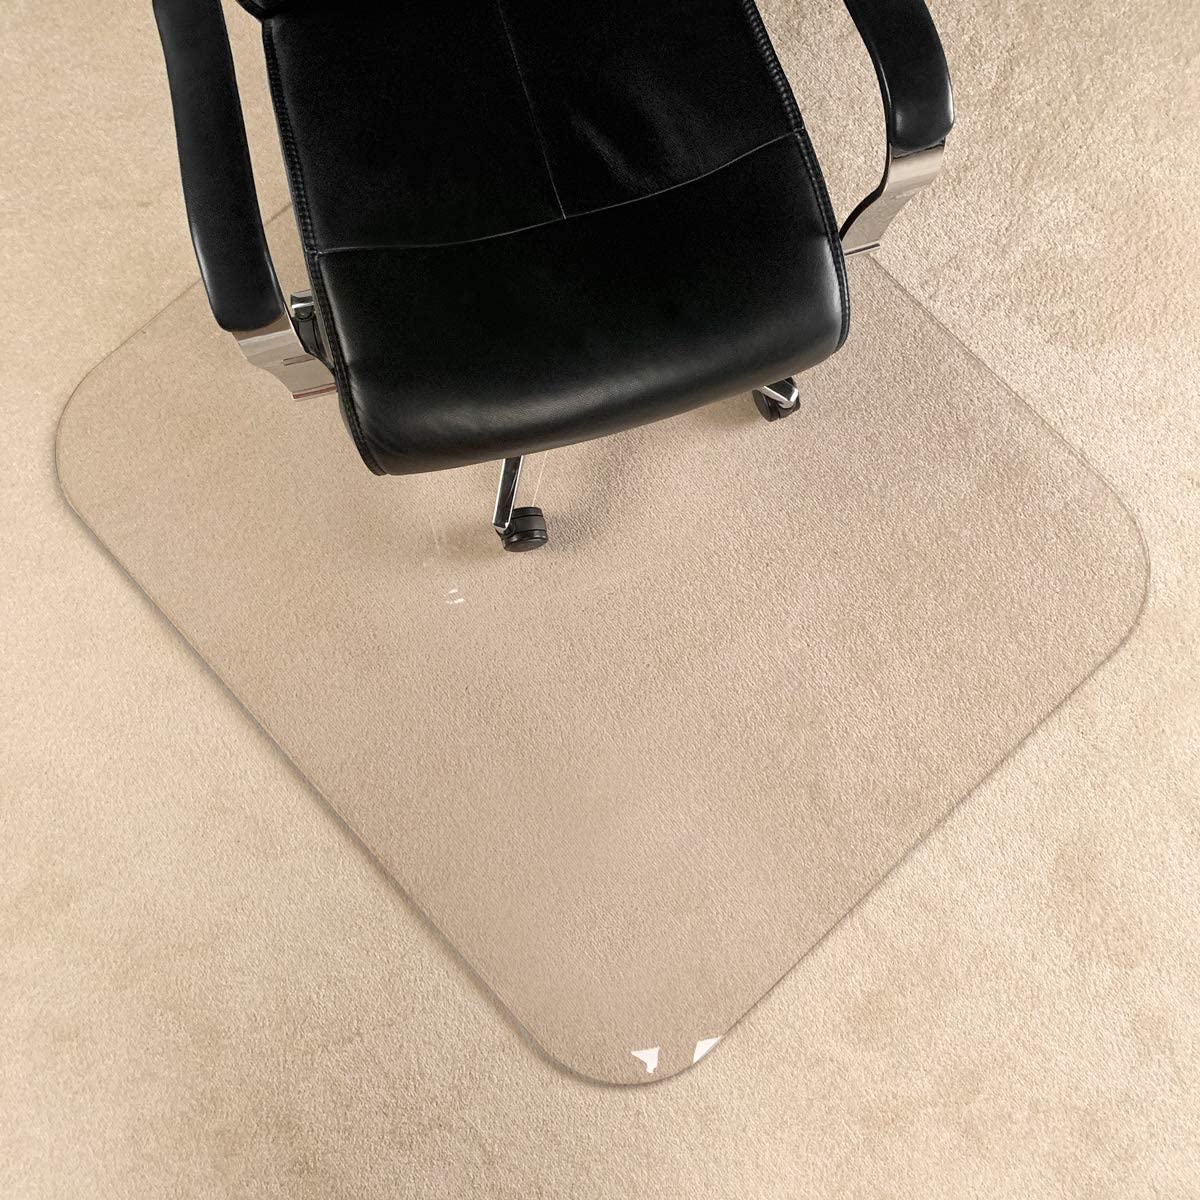 MuArts Heavy Duty Hard Chair Mat For Carpeted Floors